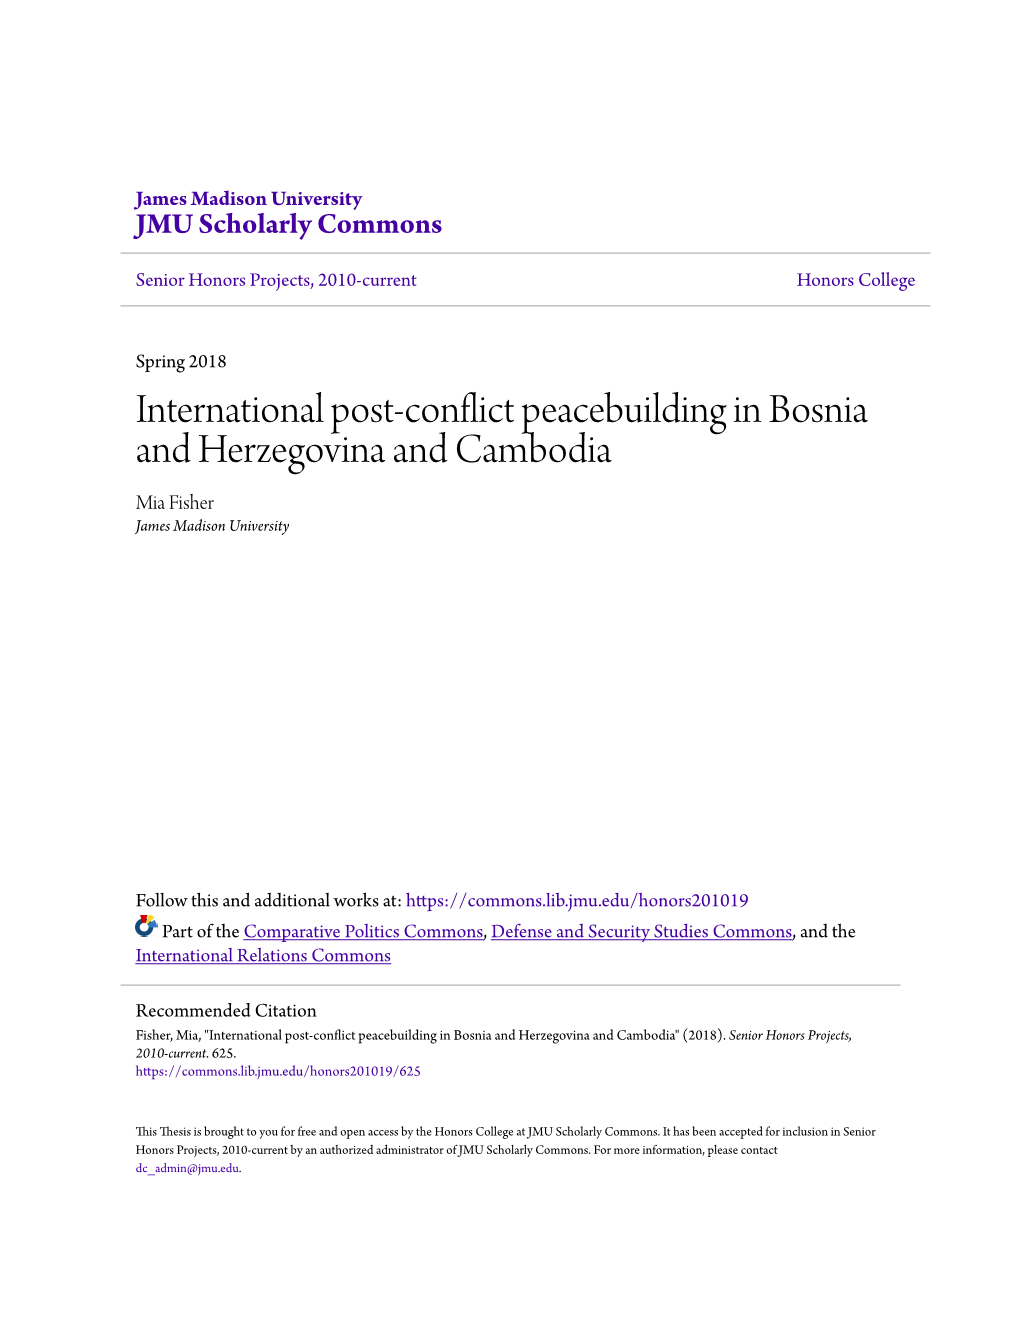 International Post-Conflict Peacebuilding in Bosnia and Herzegovina and Cambodia Mia Fisher James Madison University